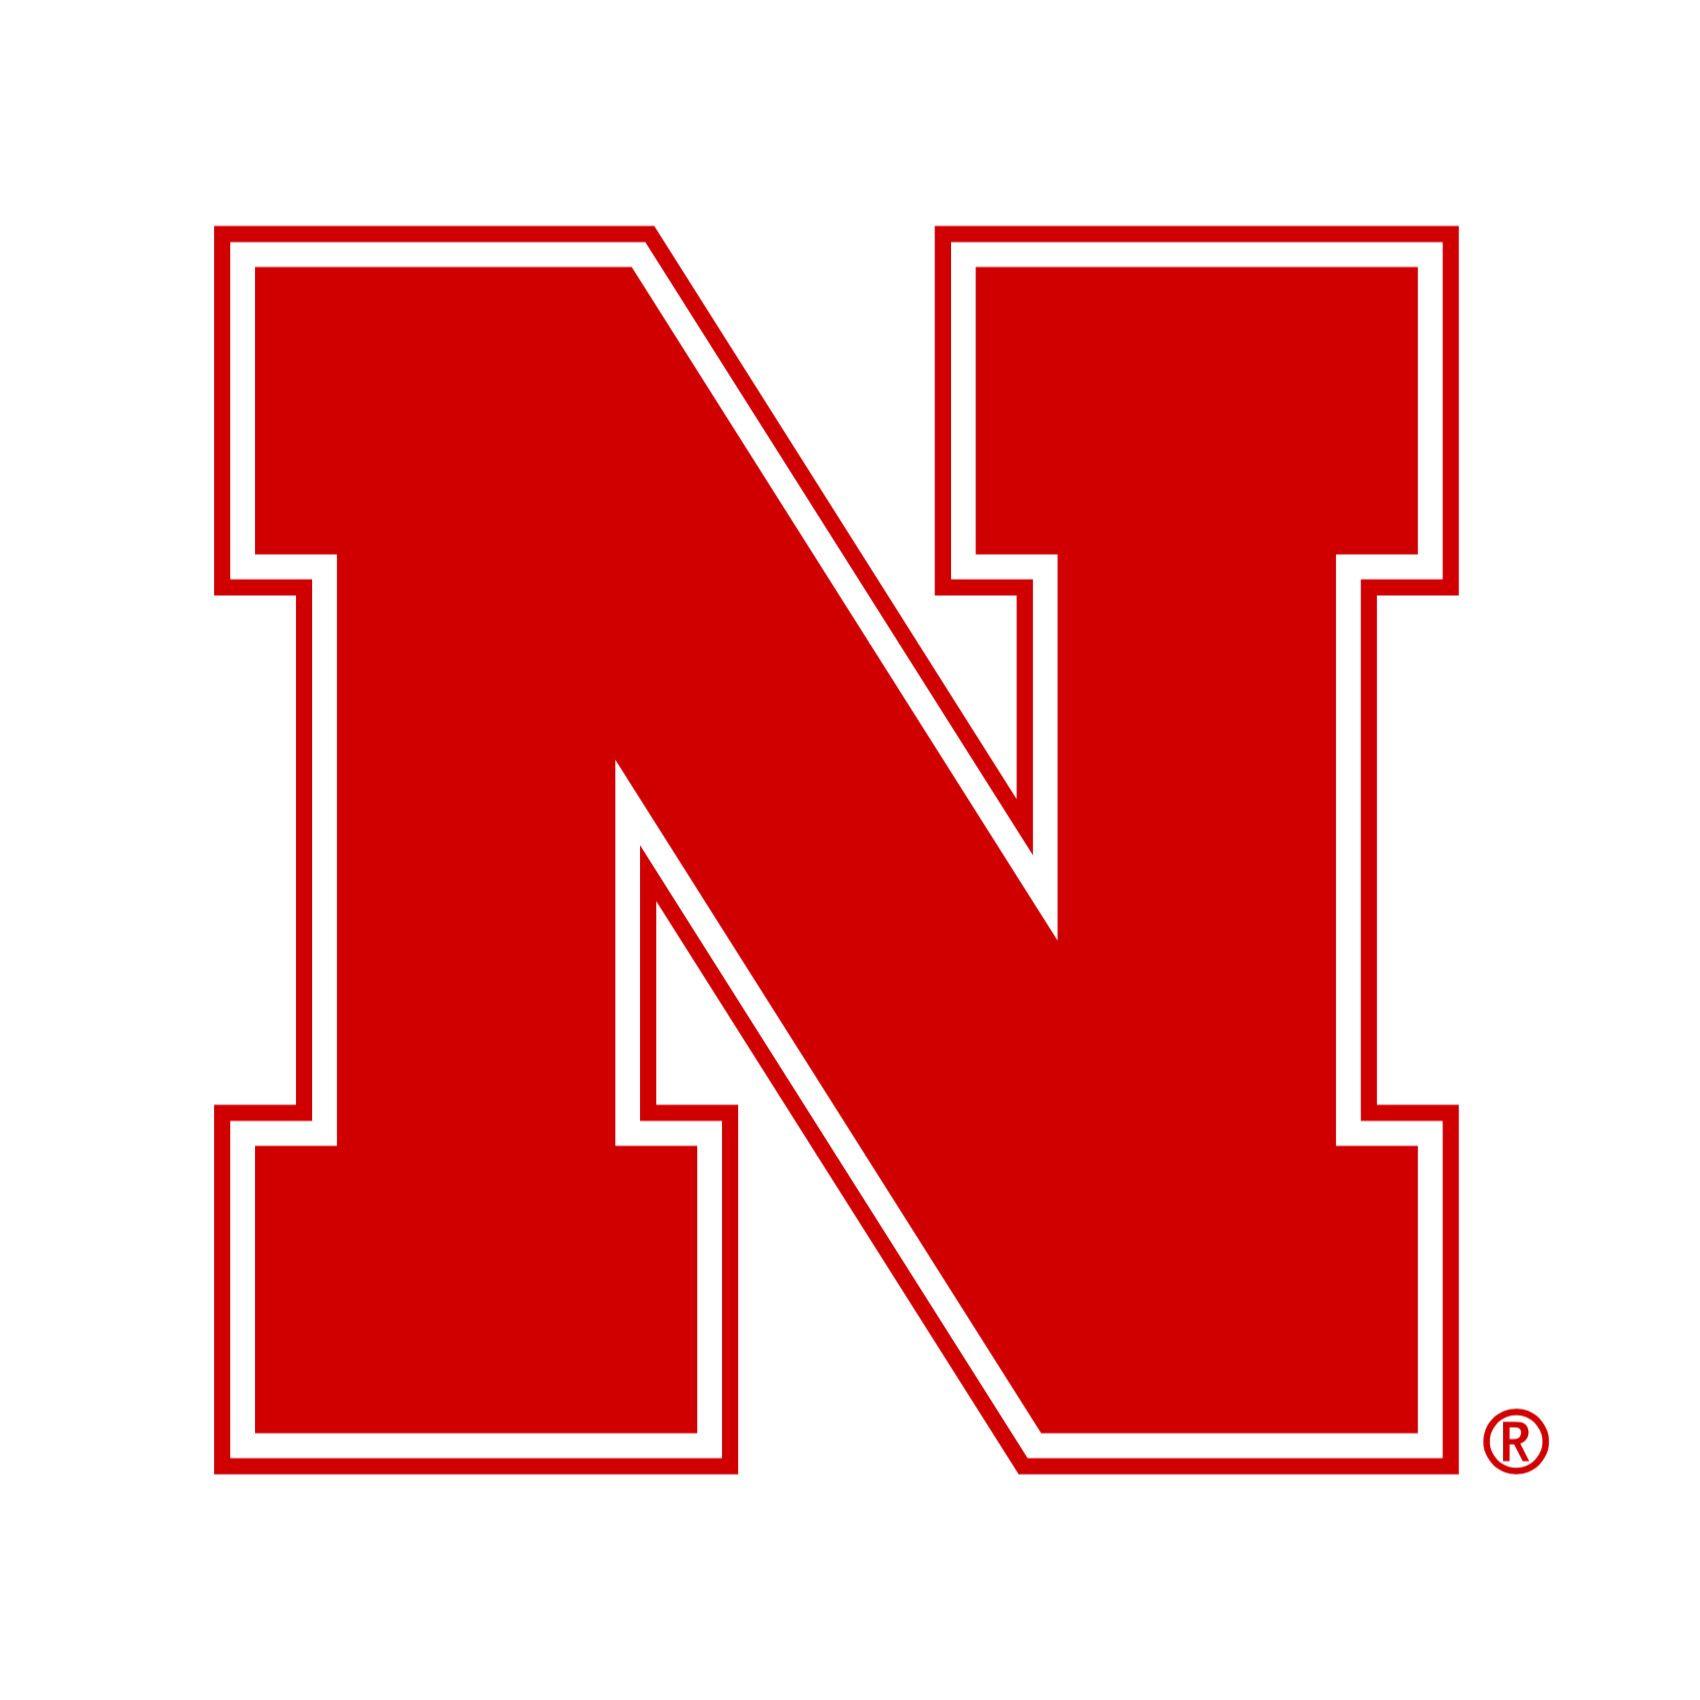 University of Nebraska Logo - Our Marks | University Communication | Nebraska